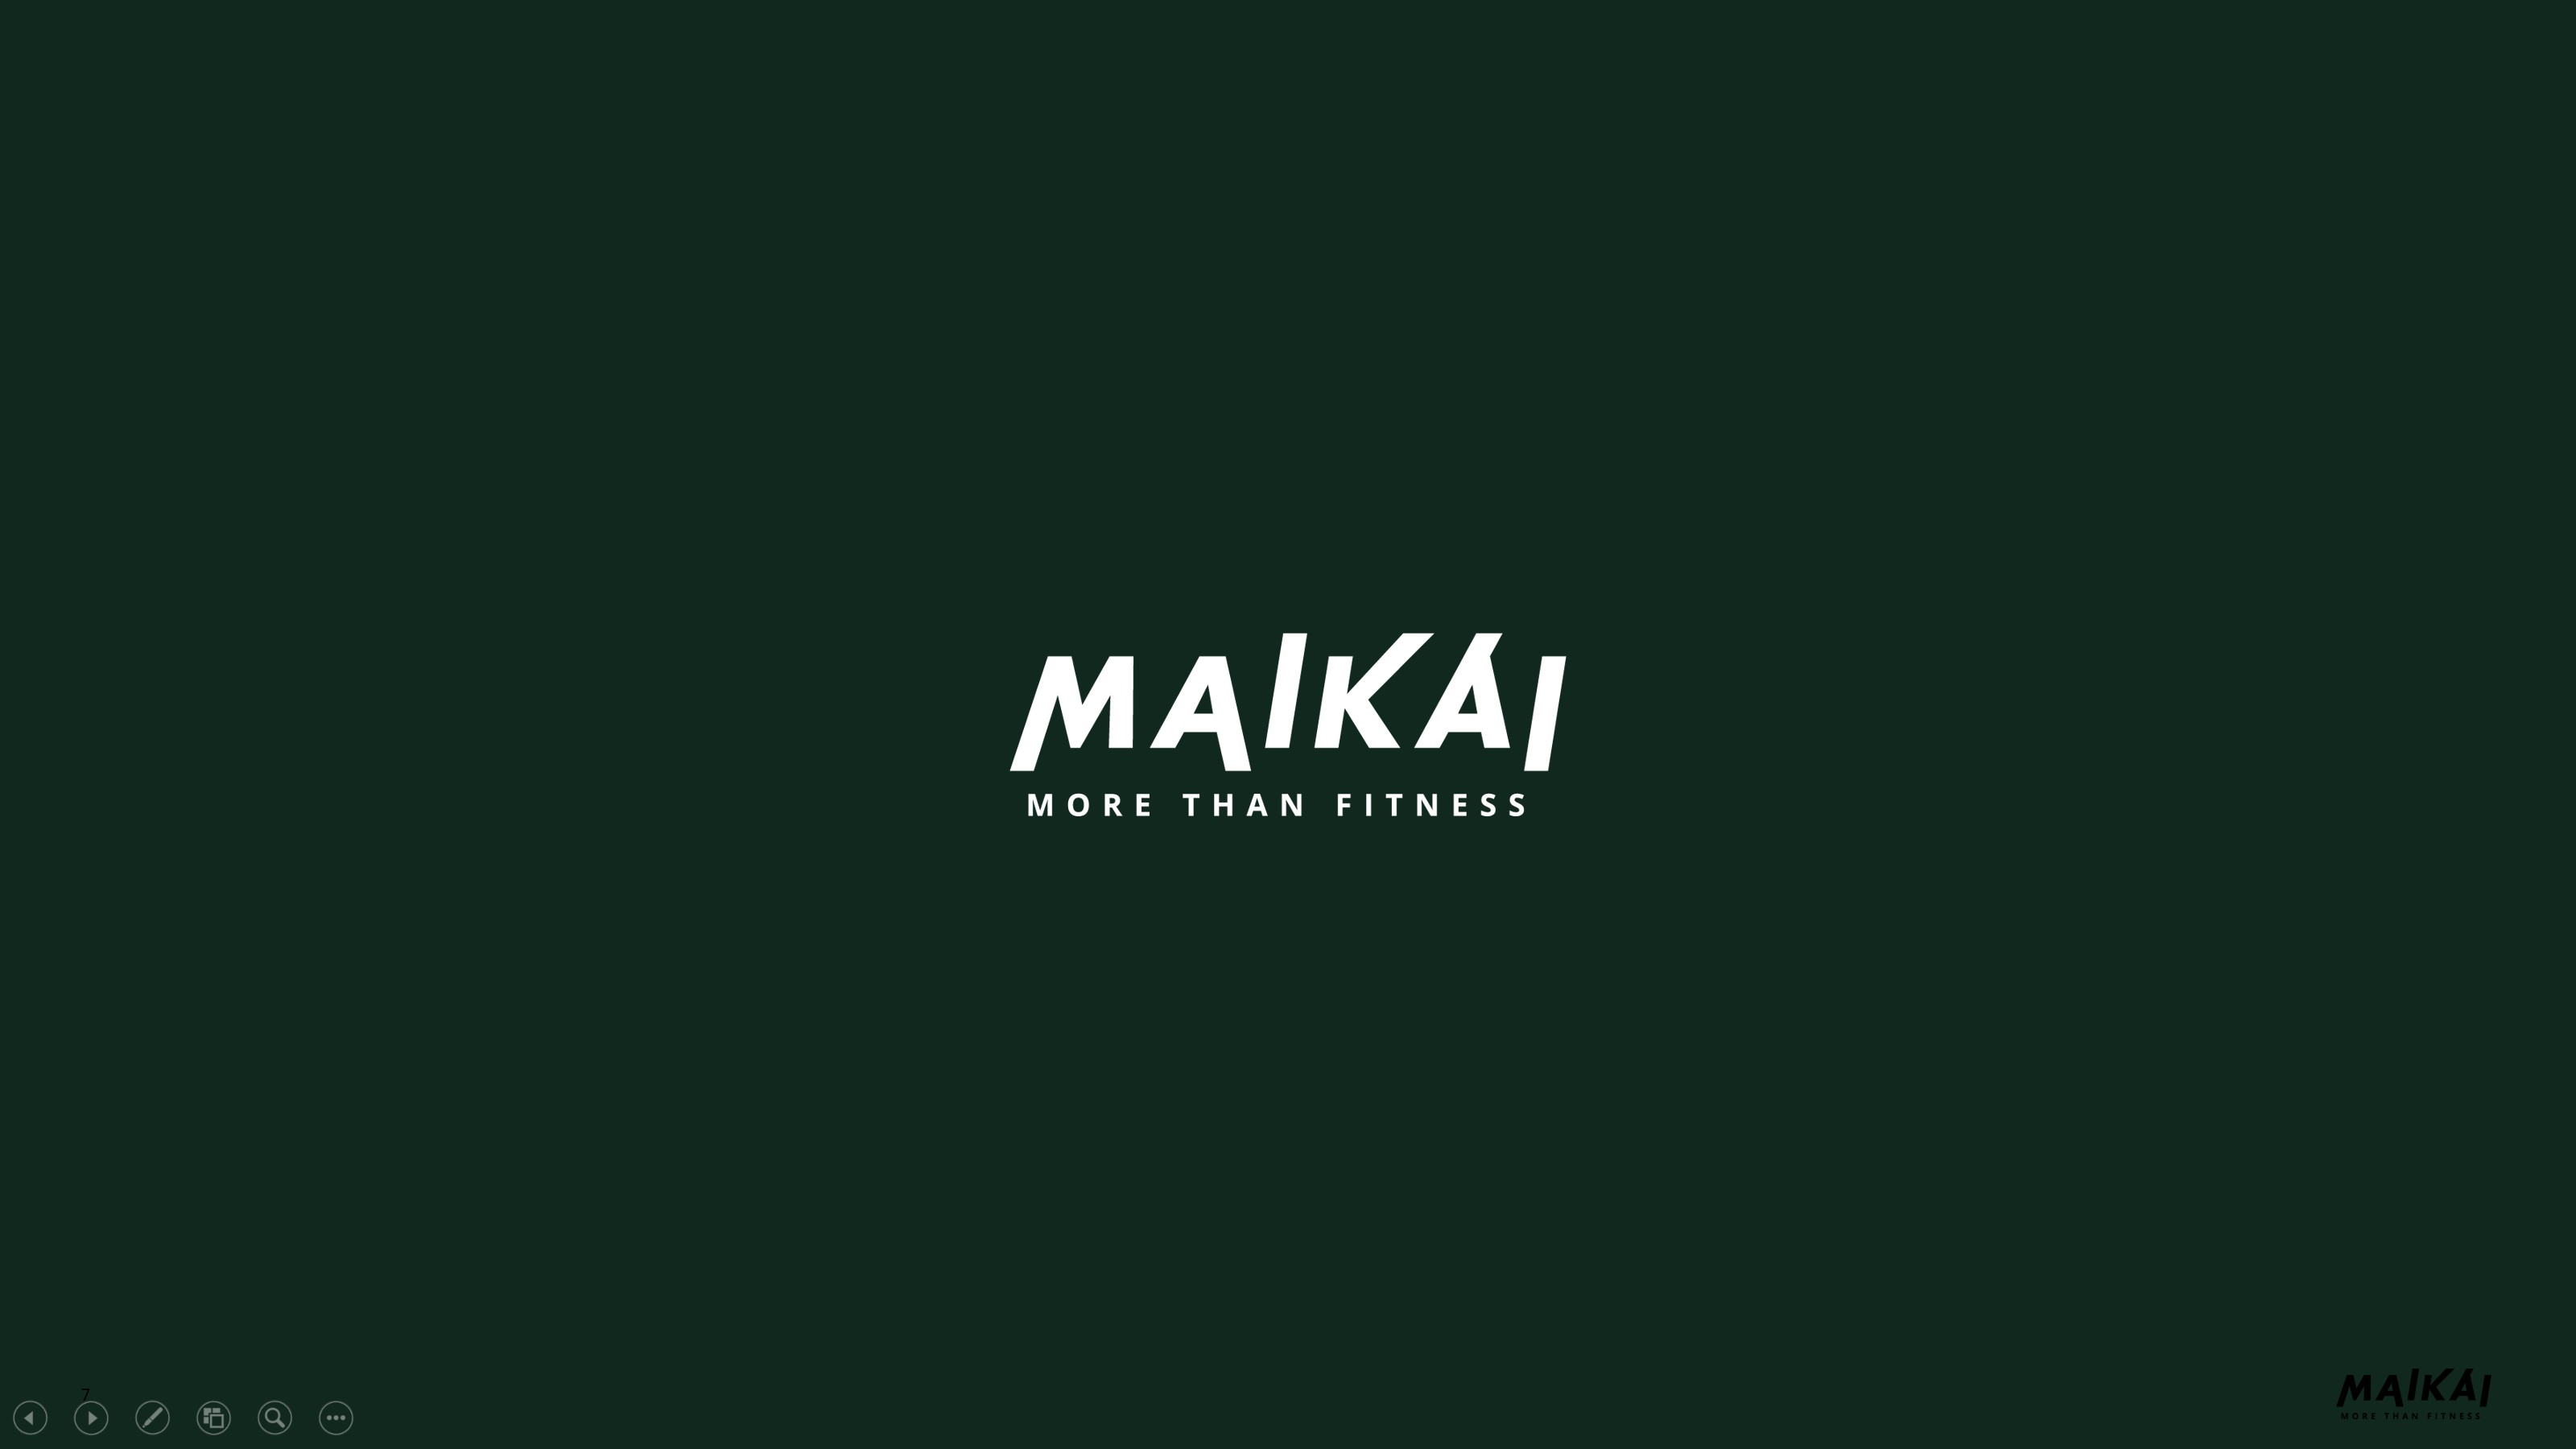 MAIKAI - MORE THAN FITNESS 